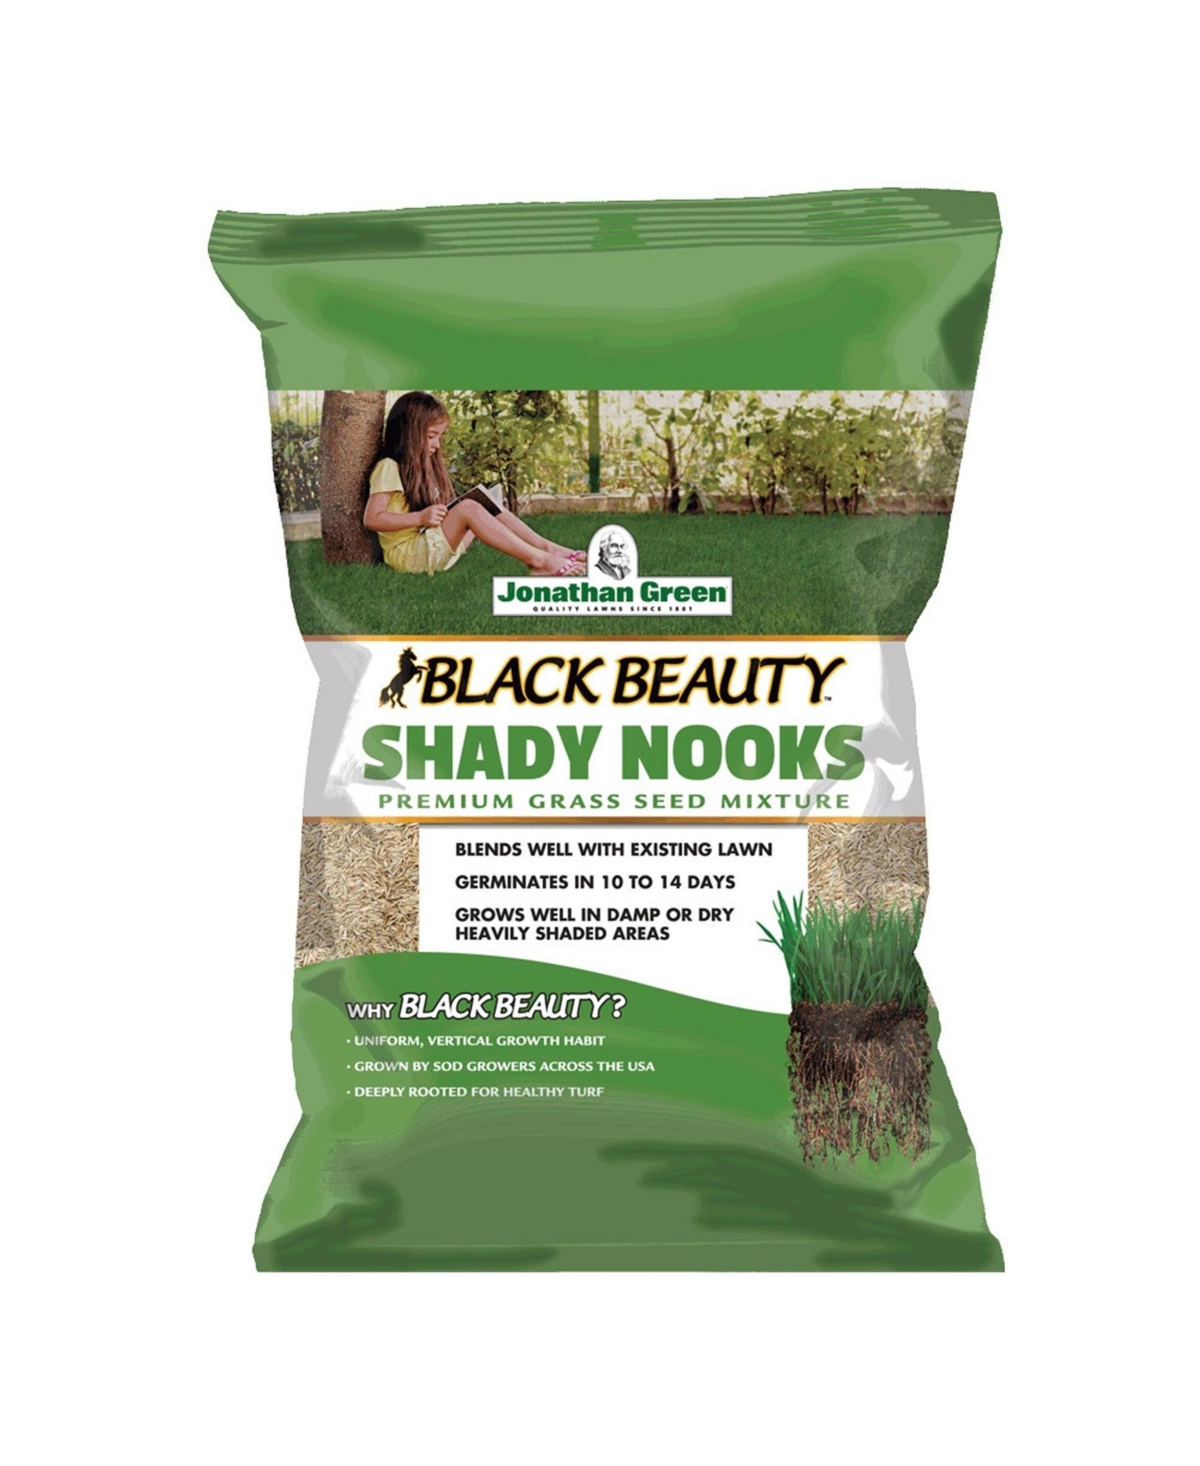 (#11957) Black Beauty Shady Nooks Grass Seed - 3lb bag - Brown